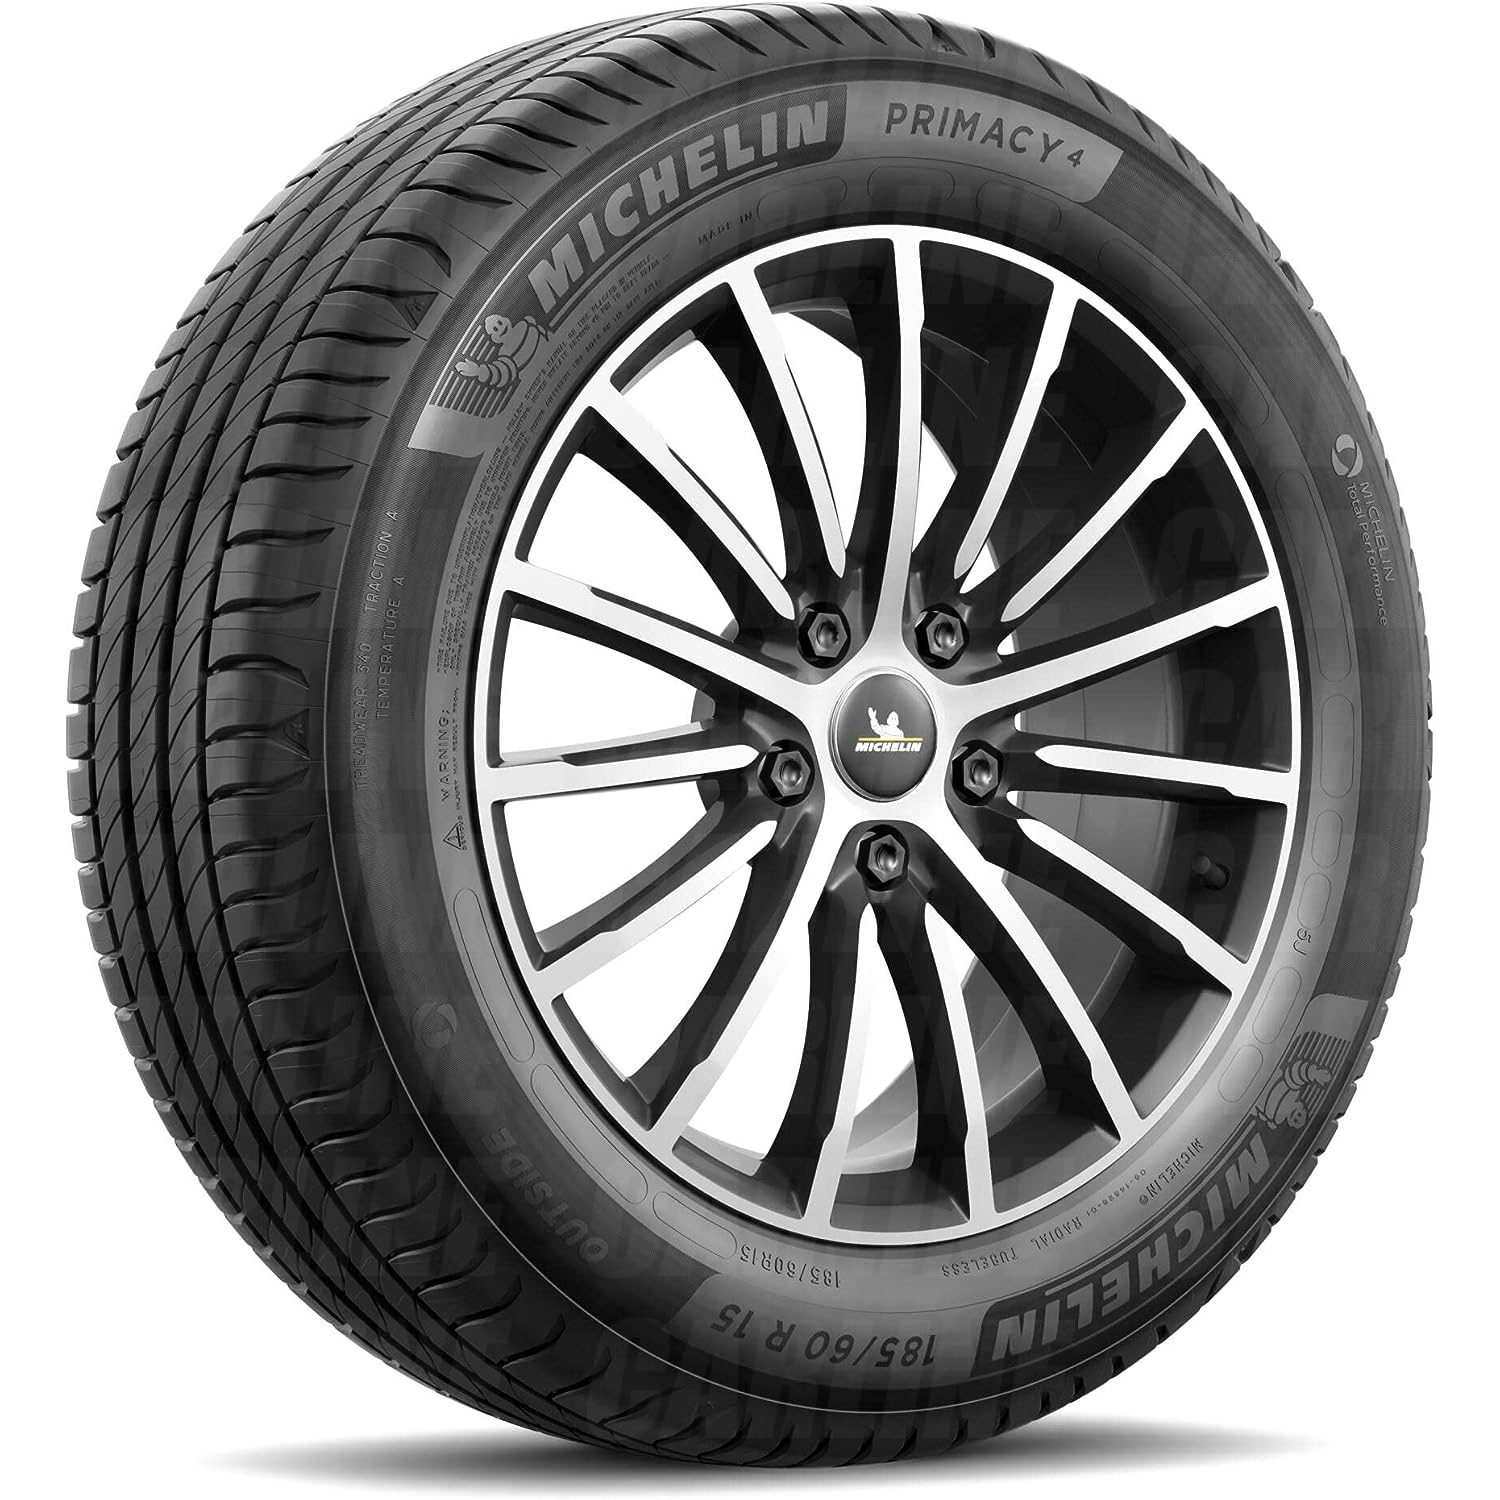 MICHELIN - PRIMACY 4 ST 215/60 R17 Tubeless Car Tyre